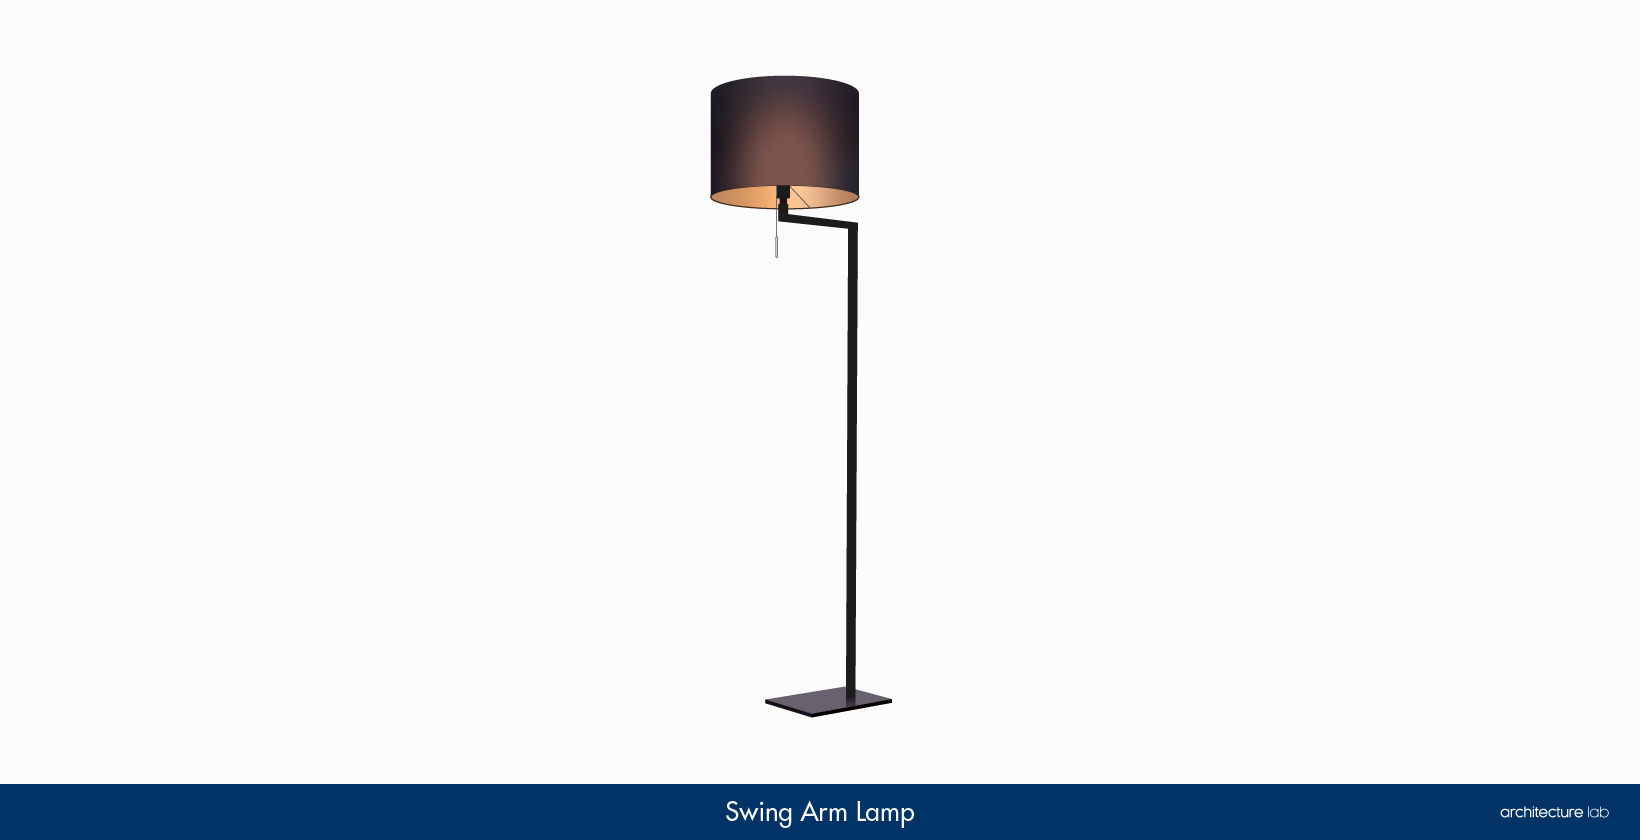 3. Swing arm lamp